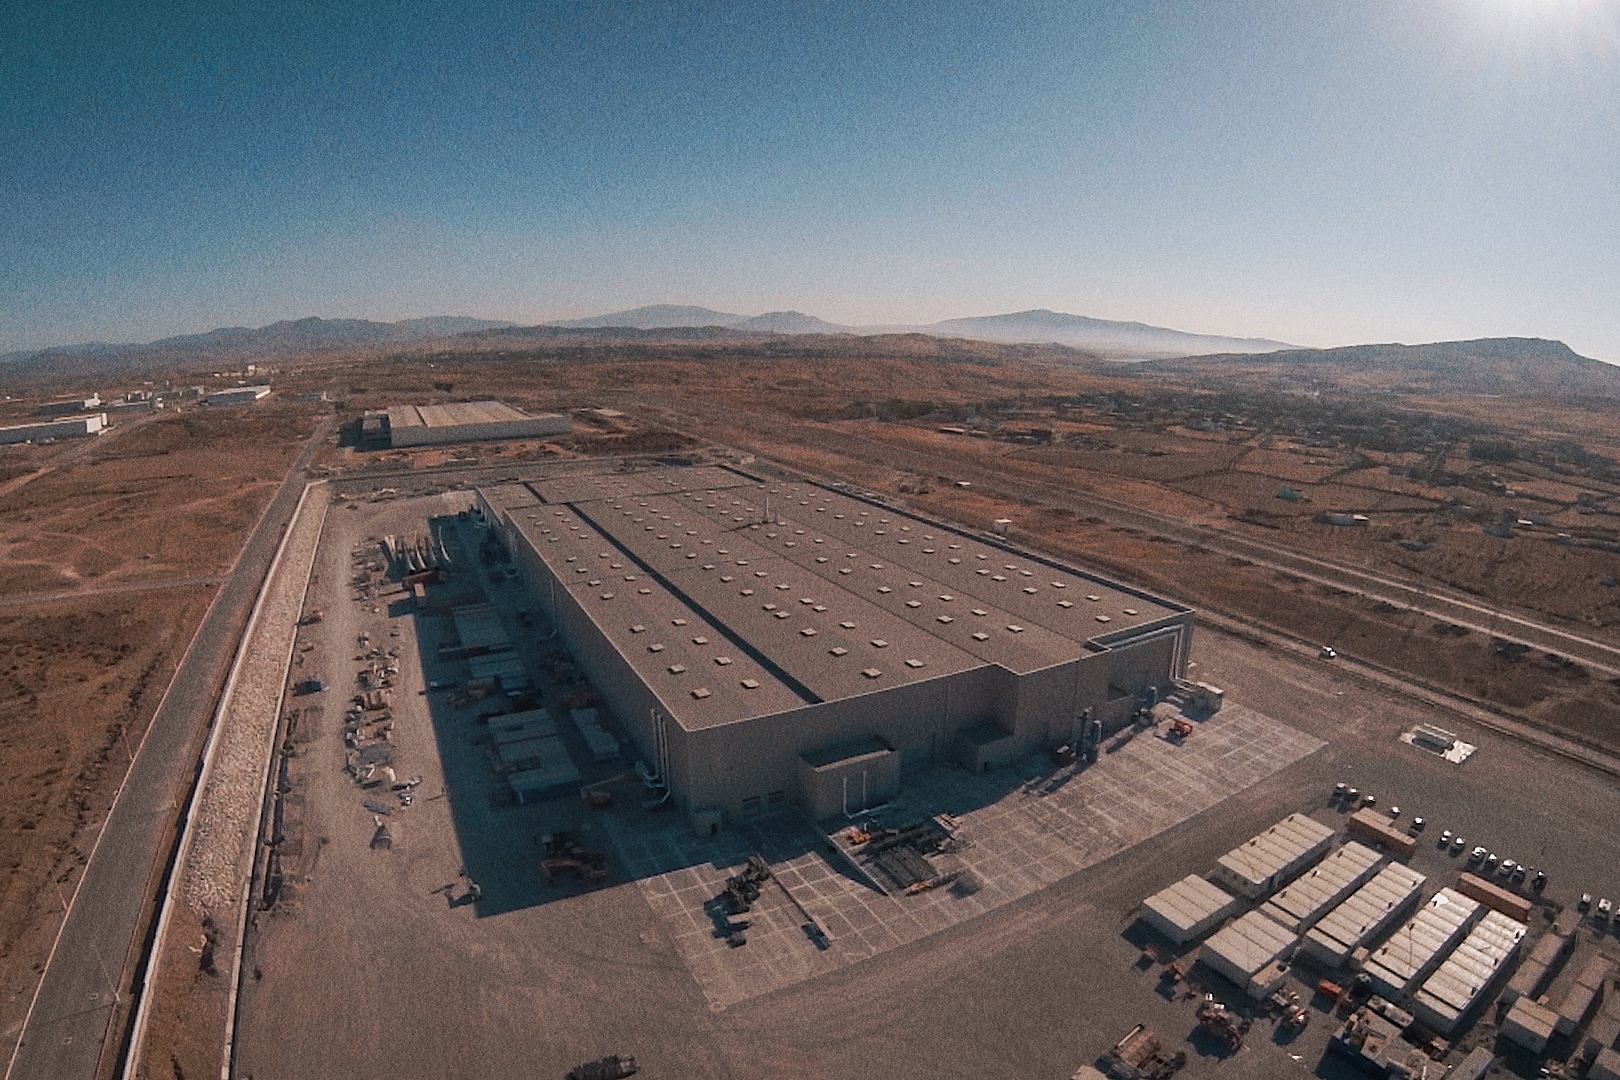 Siemens Gamesa – Corporate Video of Tangier Wind Turbine Blades Factory